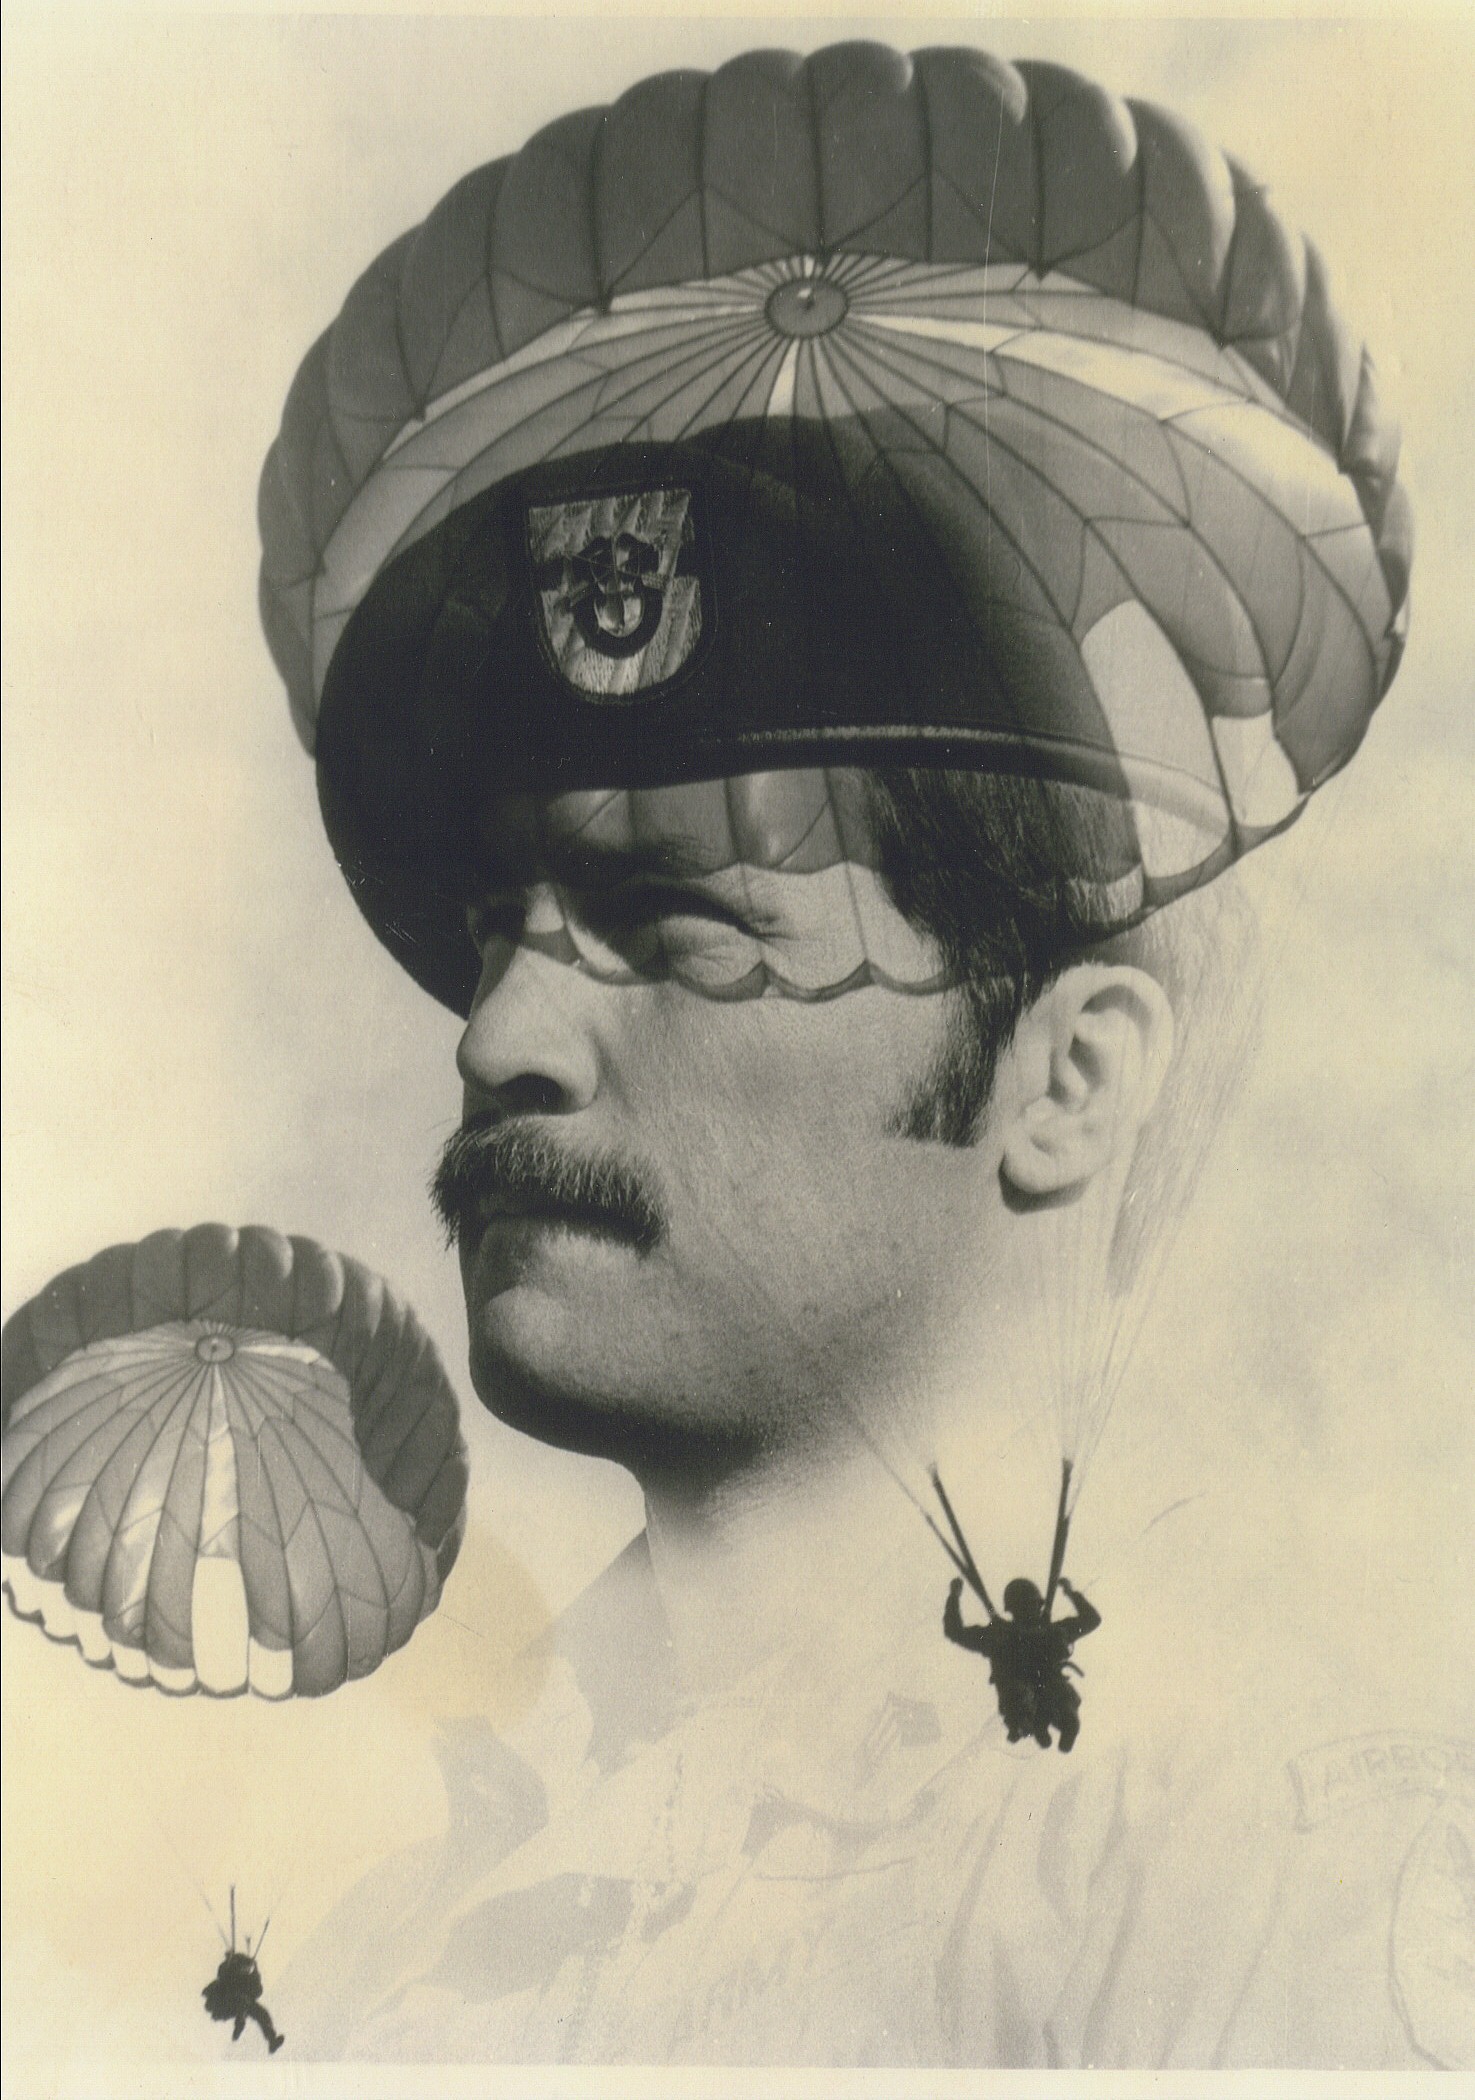 Sgt Mark Miller with MC 1 parachute